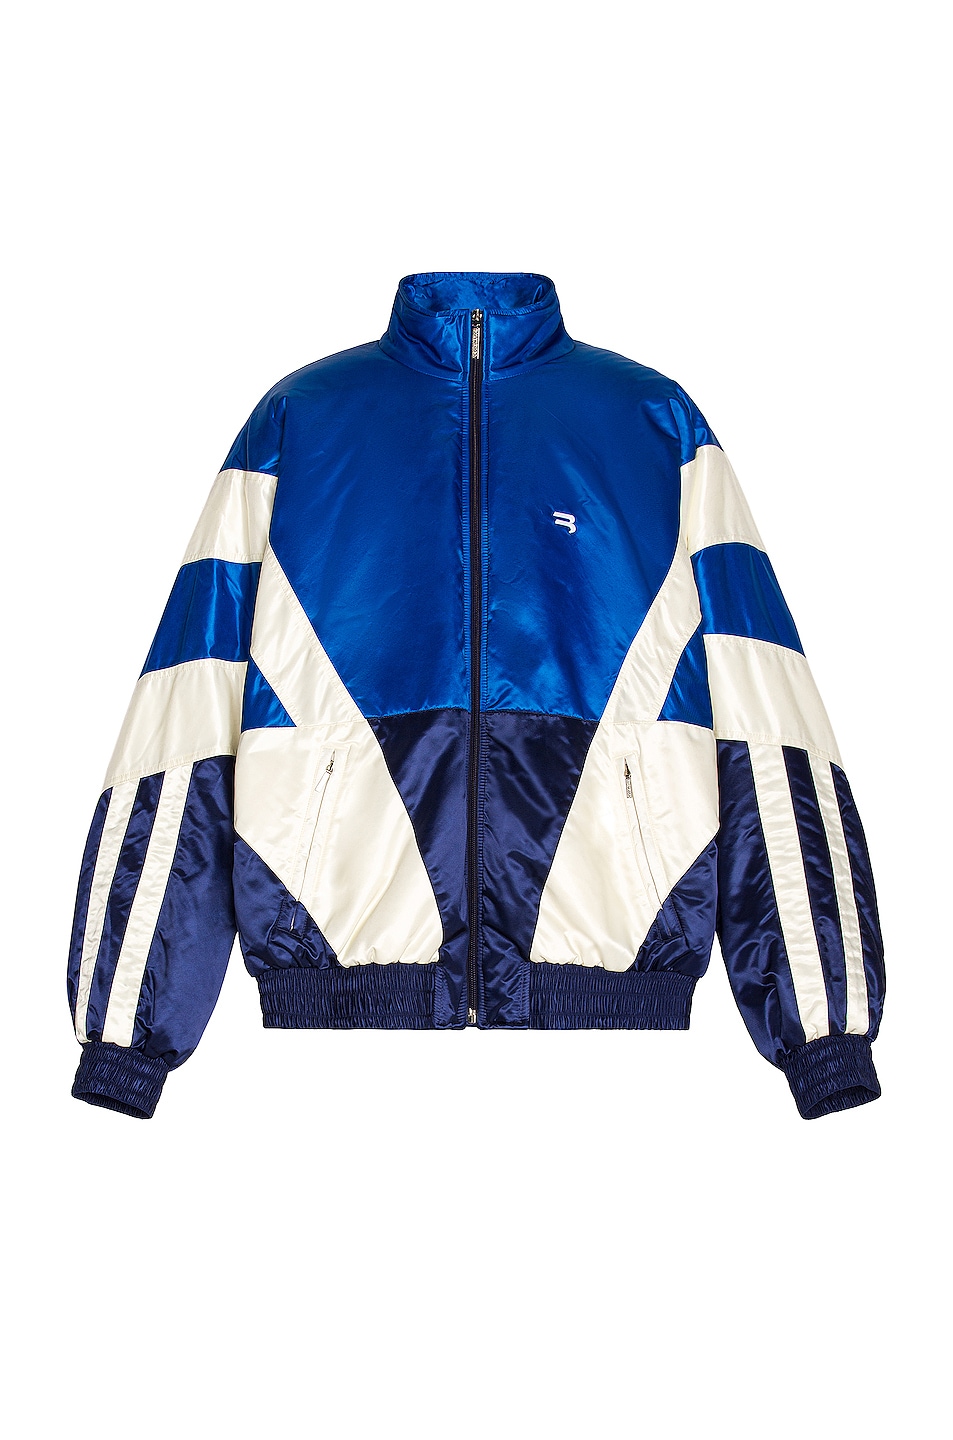 Balenciaga Padded Tracksuit Jacket in Royal Blue | FWRD